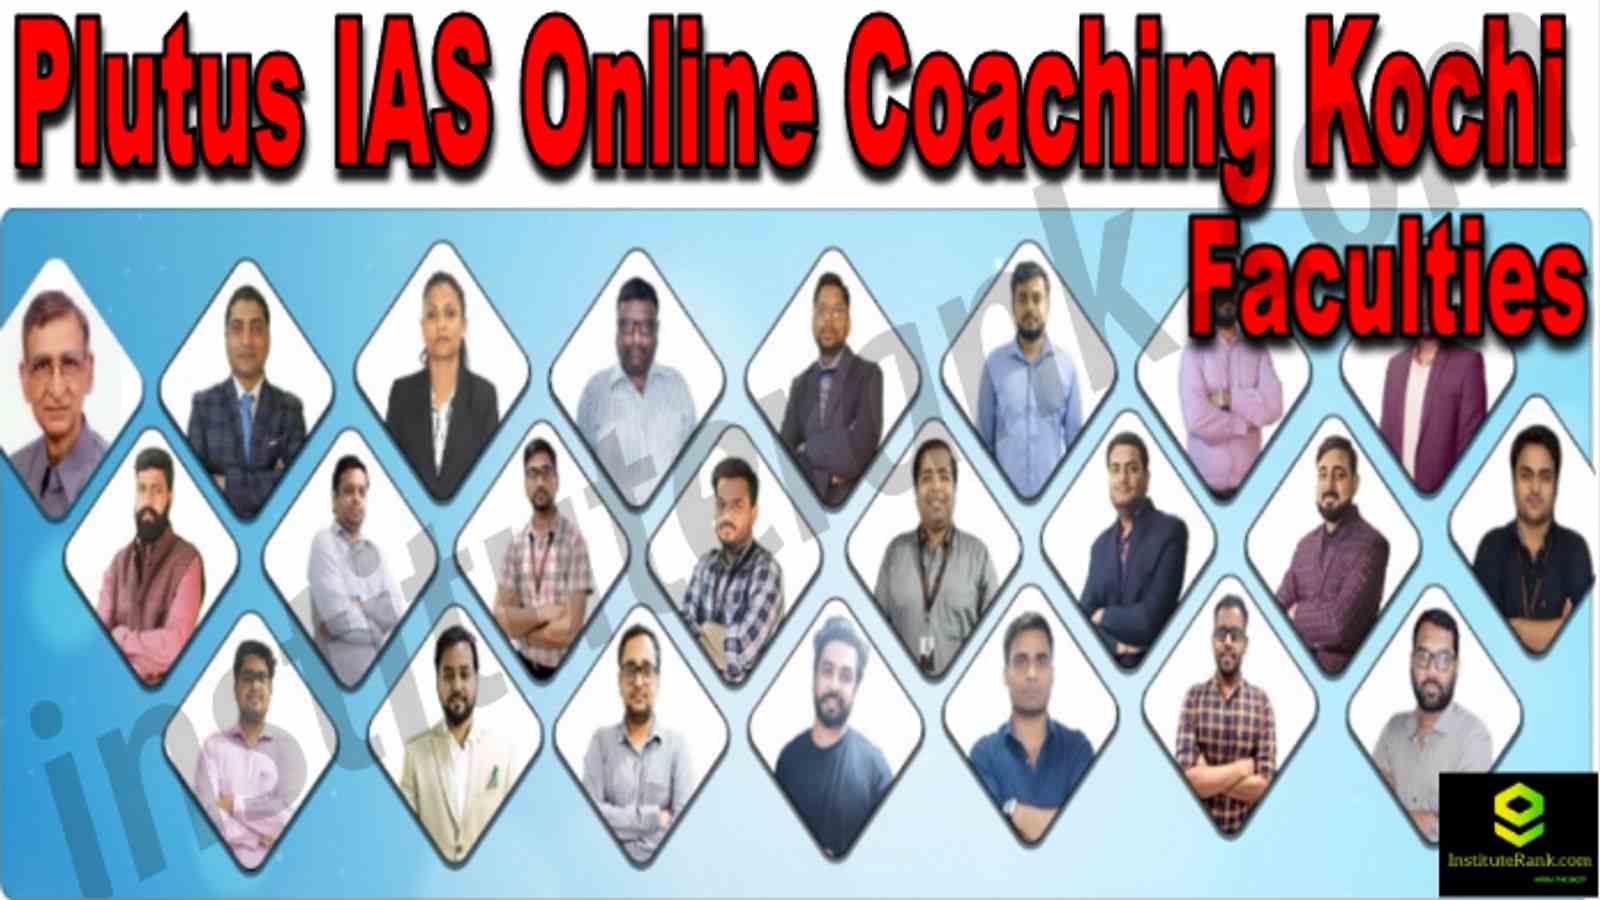 Plutus IAS Online Coaching Kochi Reviews Faculties